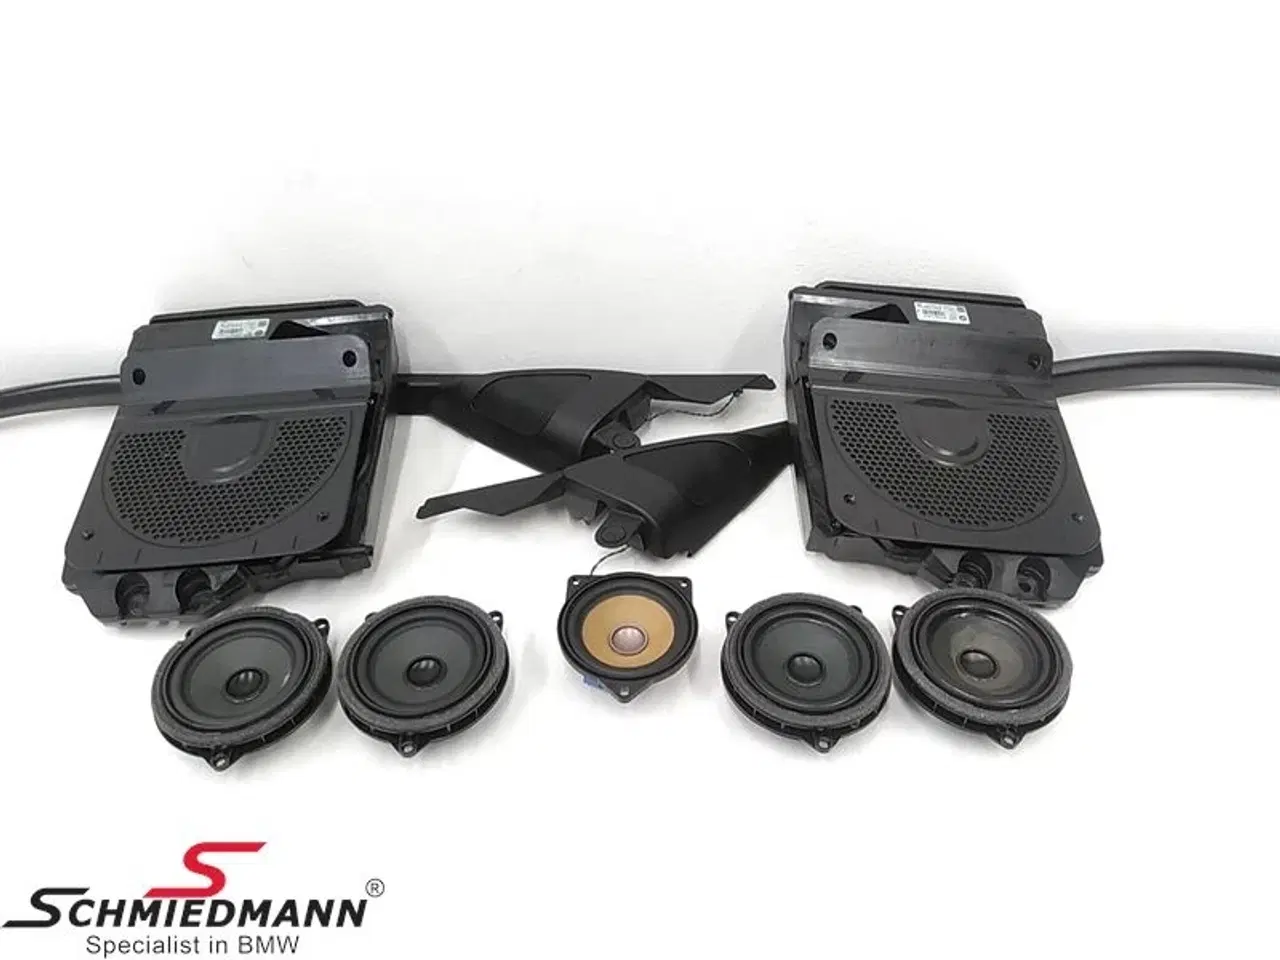 Billede 1 - højtaler sæt til S676A HiFi speaker system K23814 F30 F31 F34GT F32 F33 F35 F36 F80 M3 F82 M4 F83 M4 cabriolet F30 LCI F31 LCI F80 LCI M3 F35 LCI F34